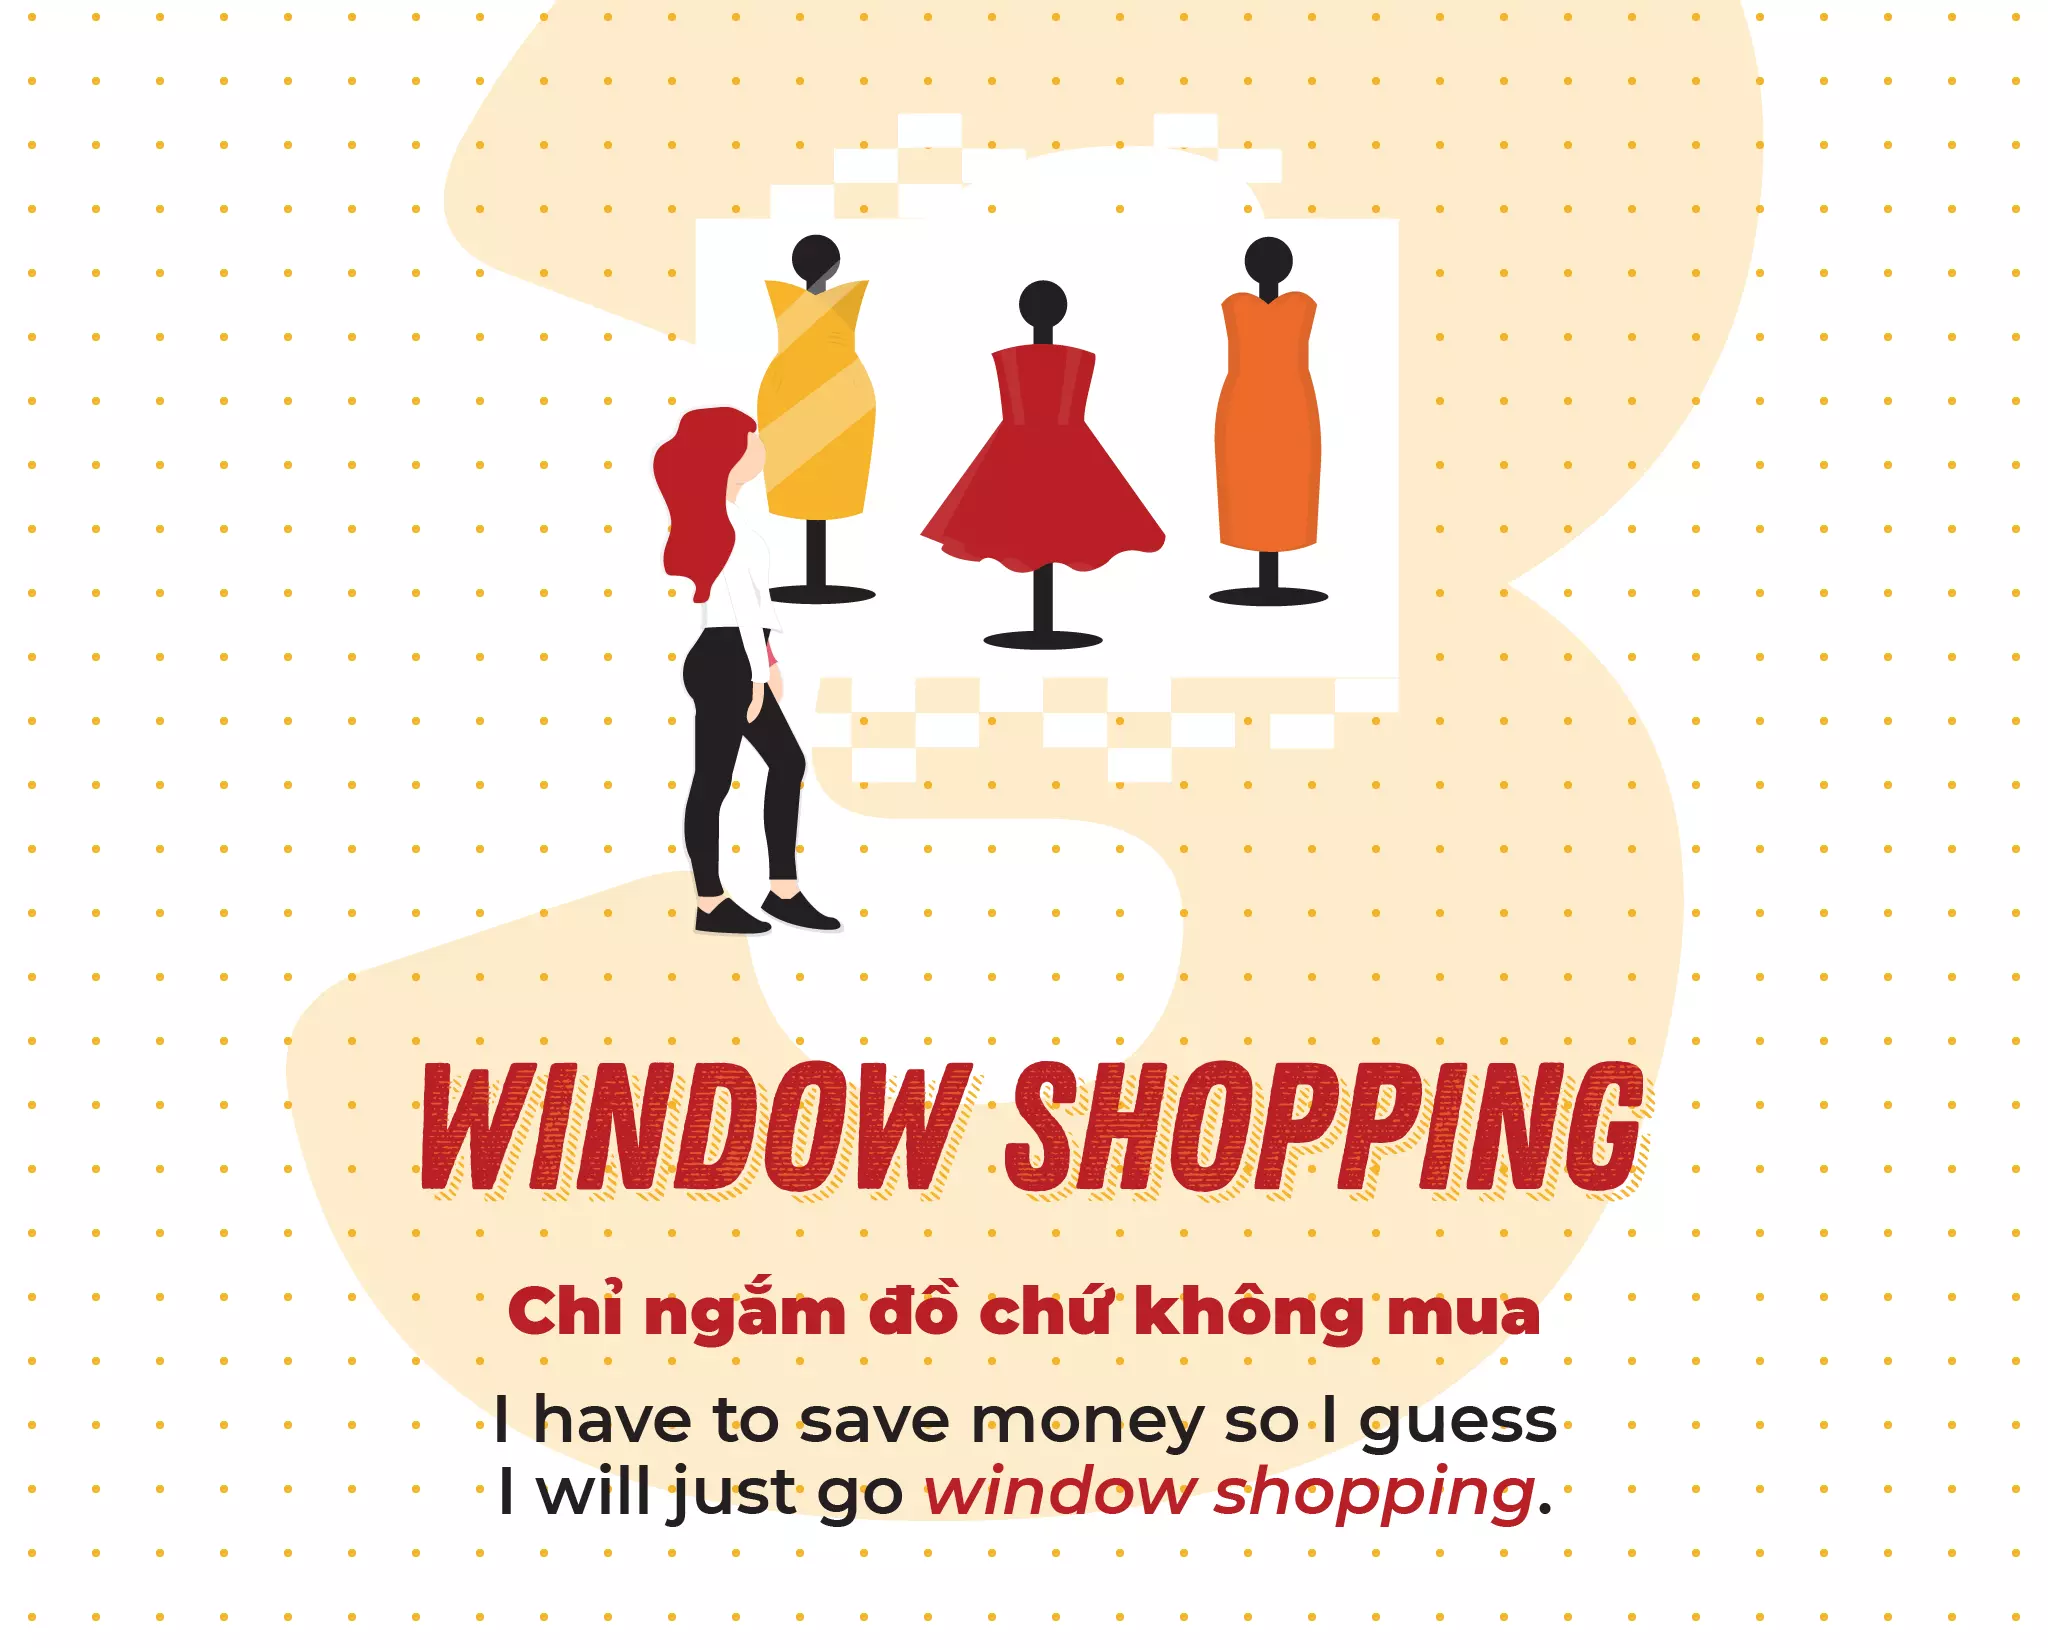 Window-shopping - Idiom theo chủ đề Shopping